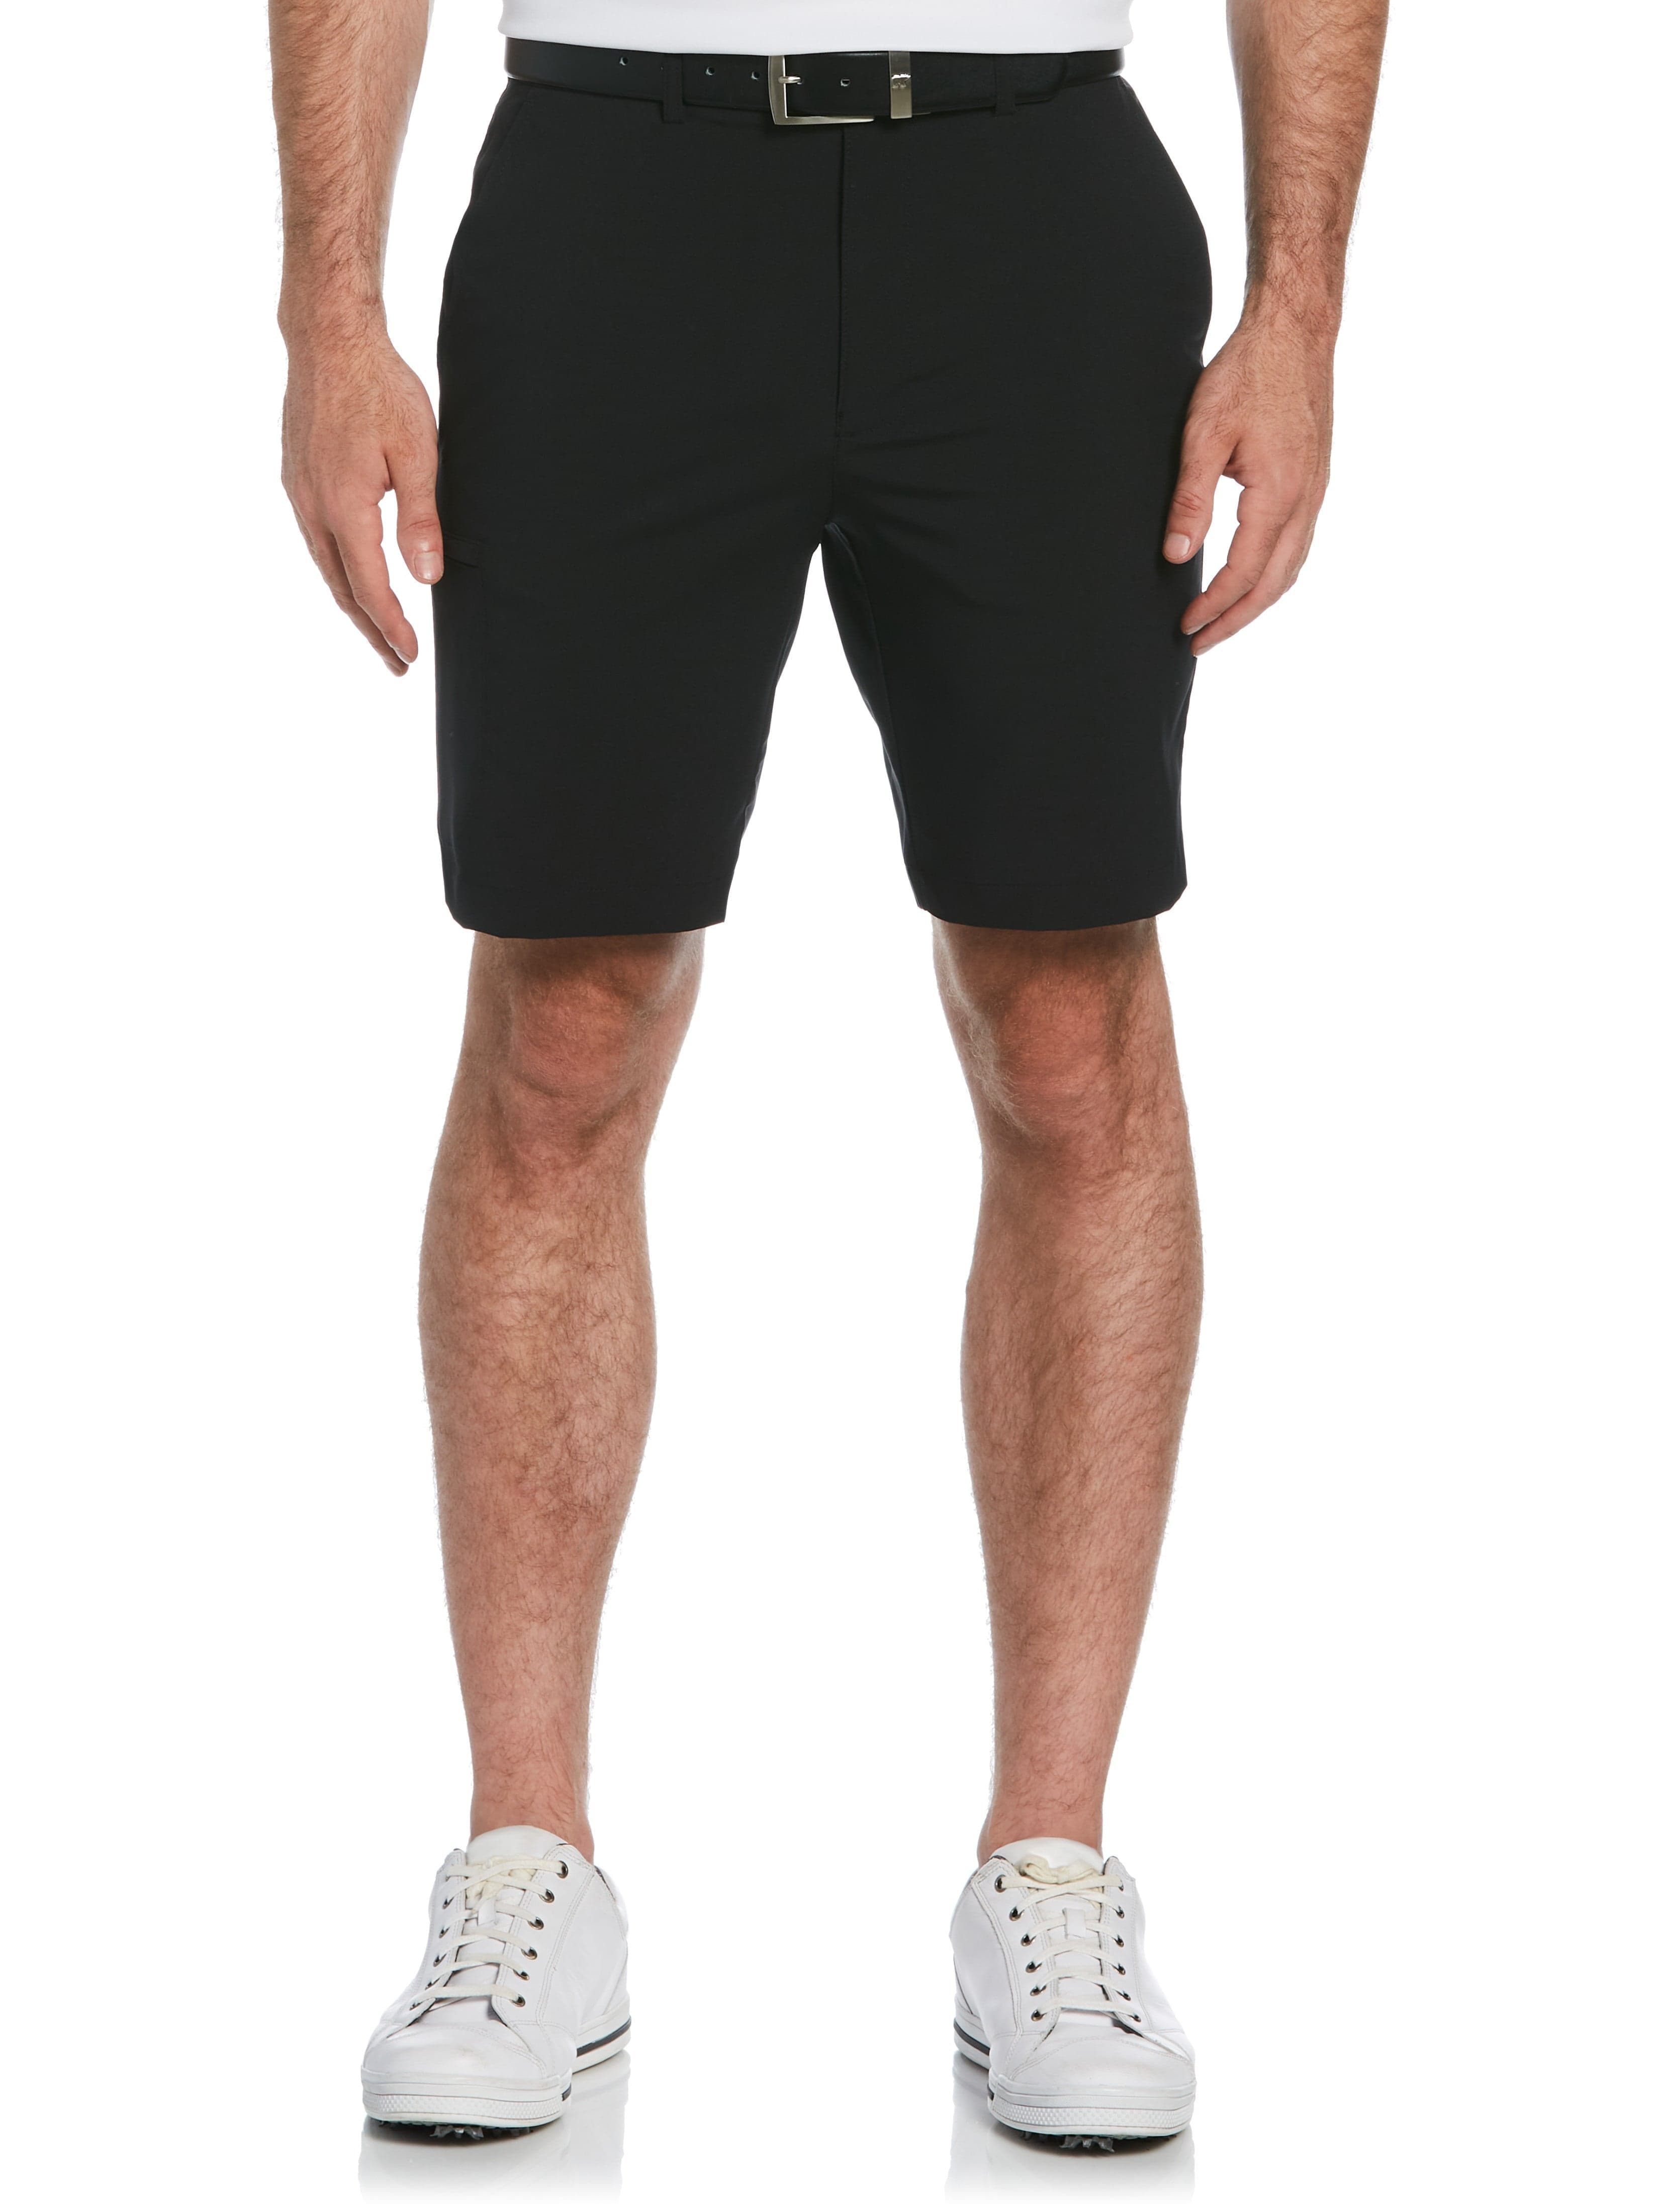 Jack Nicklaus Mens Flat Front Solid Golf Shorts w/ Cargo Pocket, Size 32, Black, 100% Polyester | Golf Apparel Shop